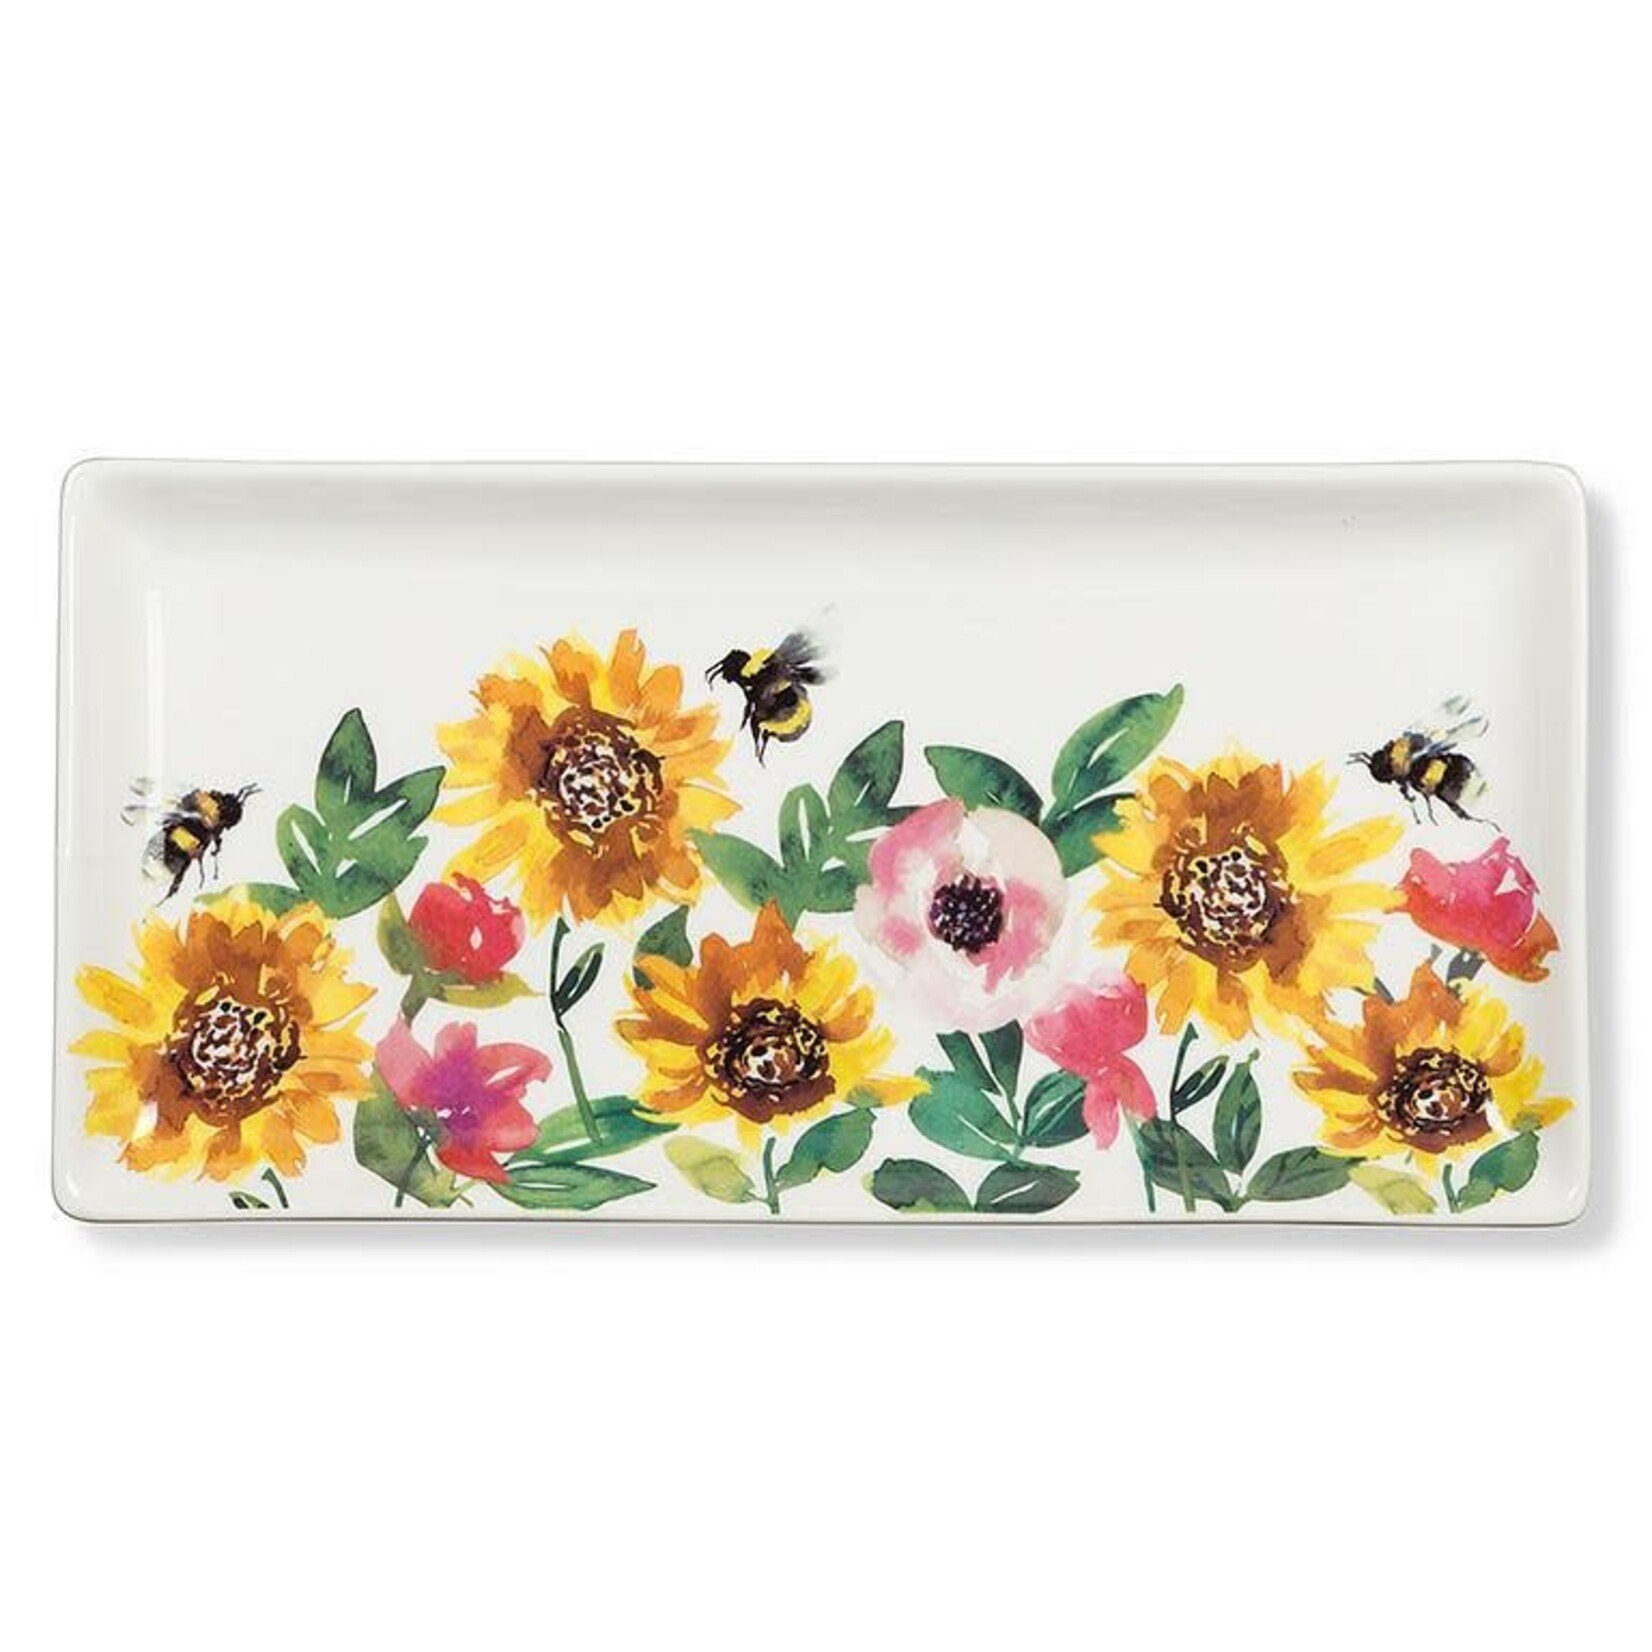 Abbott Platter Plate - Sunflowers & Bees